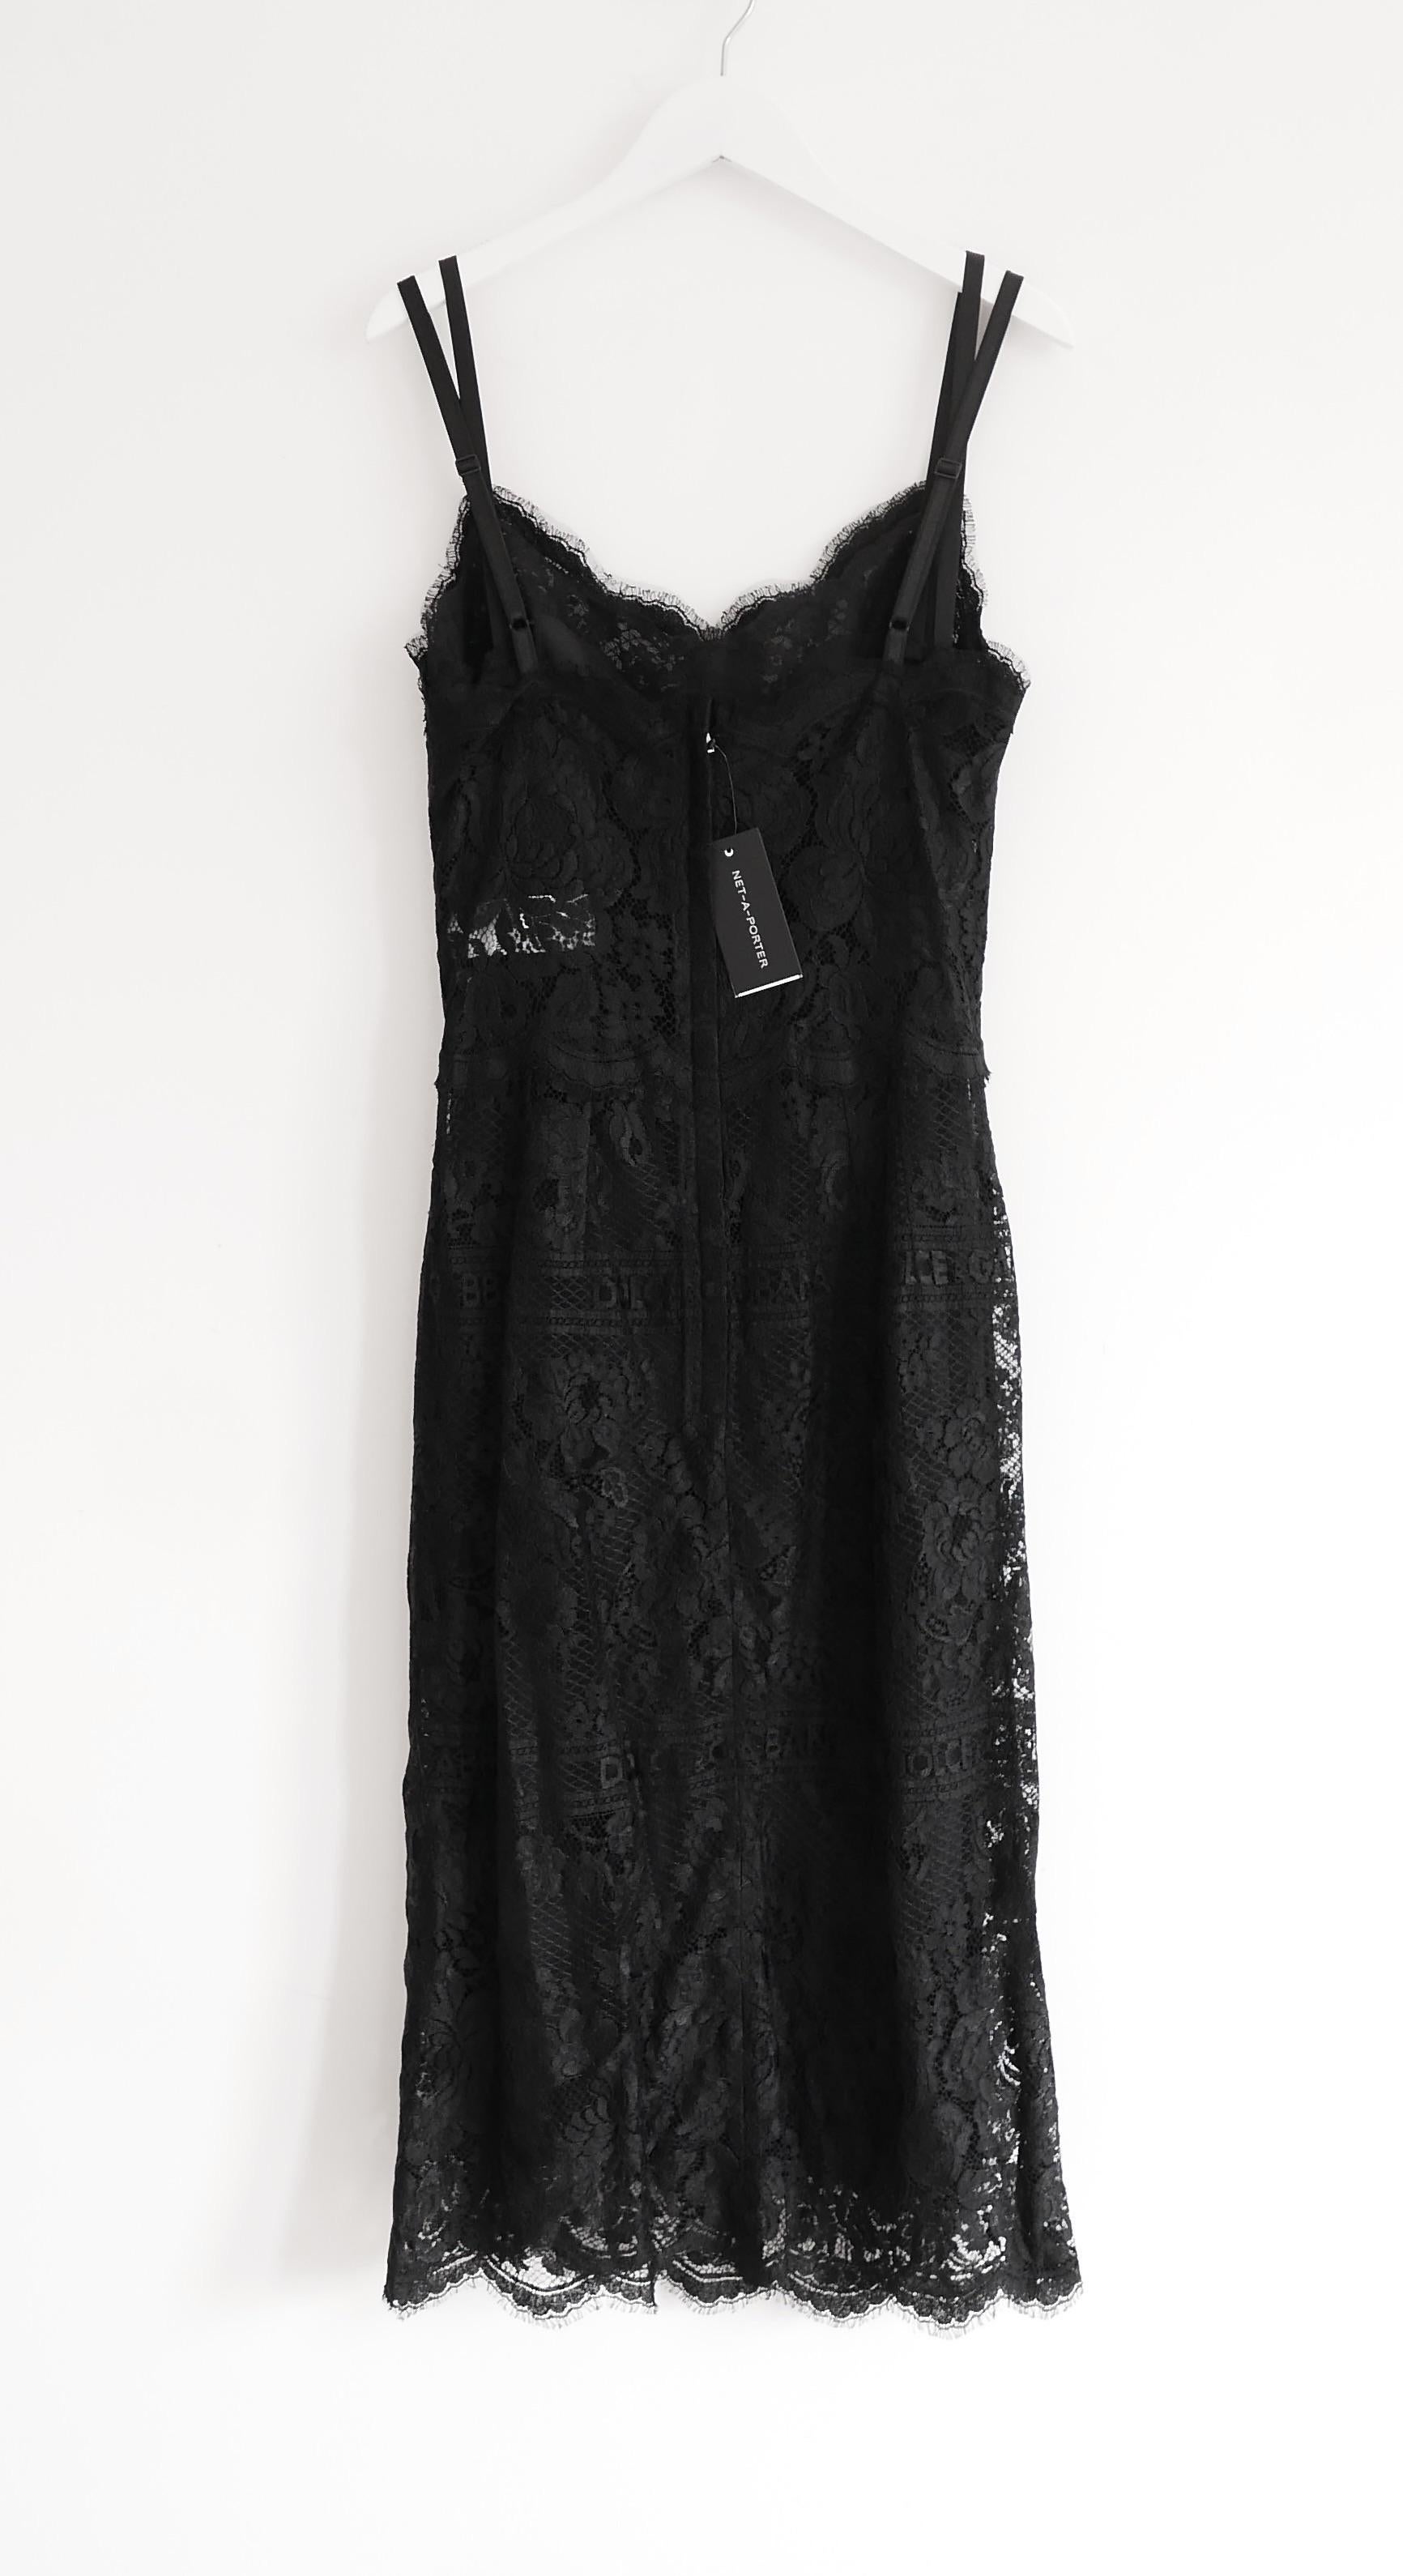 Dolce & Gabbana Hot Stuff Black Lace Dress For Sale 2